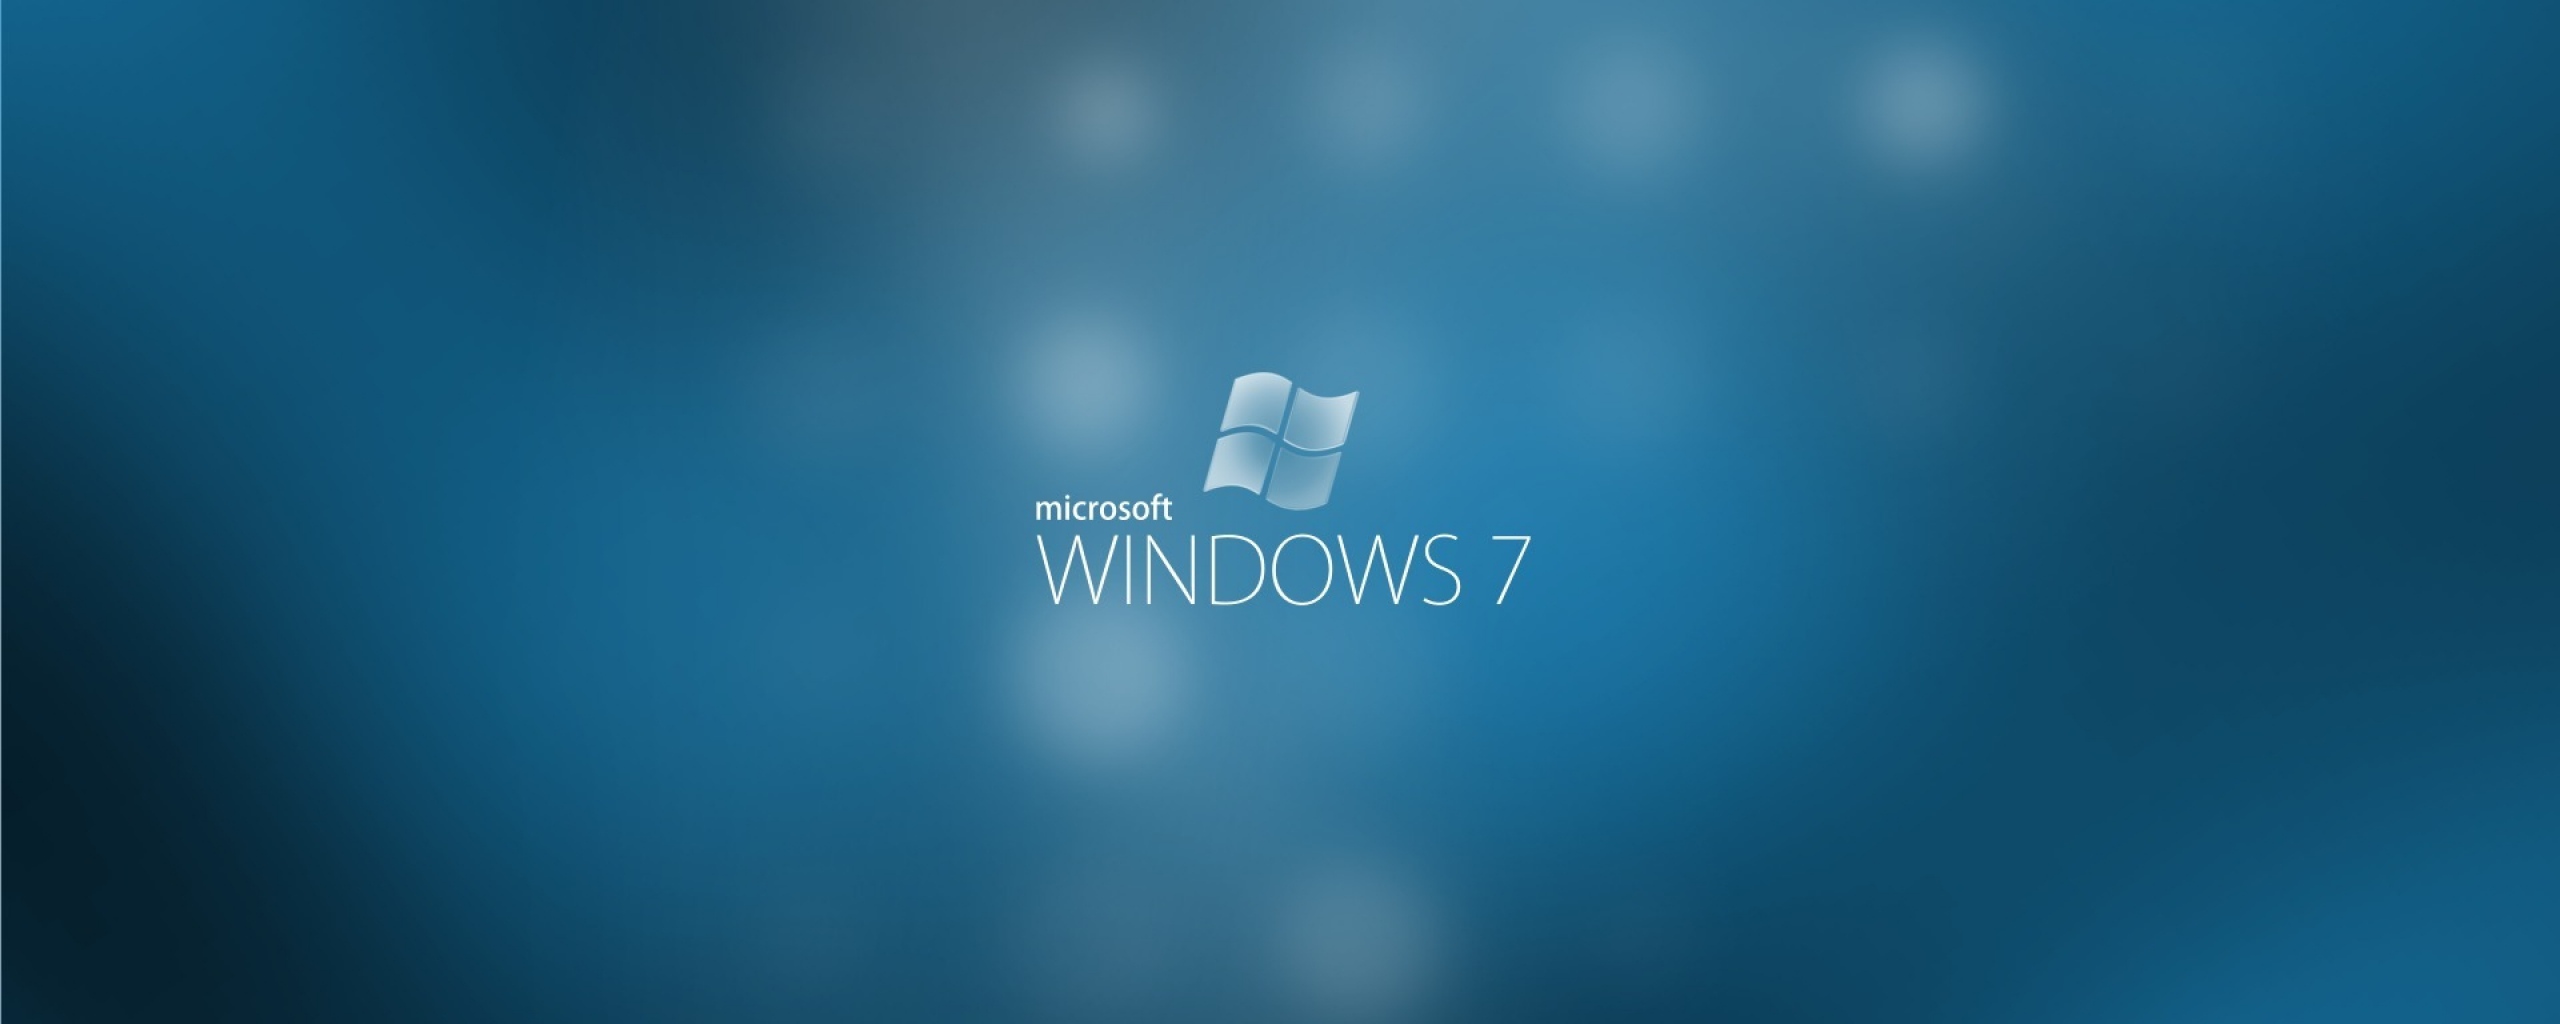 Windows Os Blue White Wallpaper Background Dual Monitor